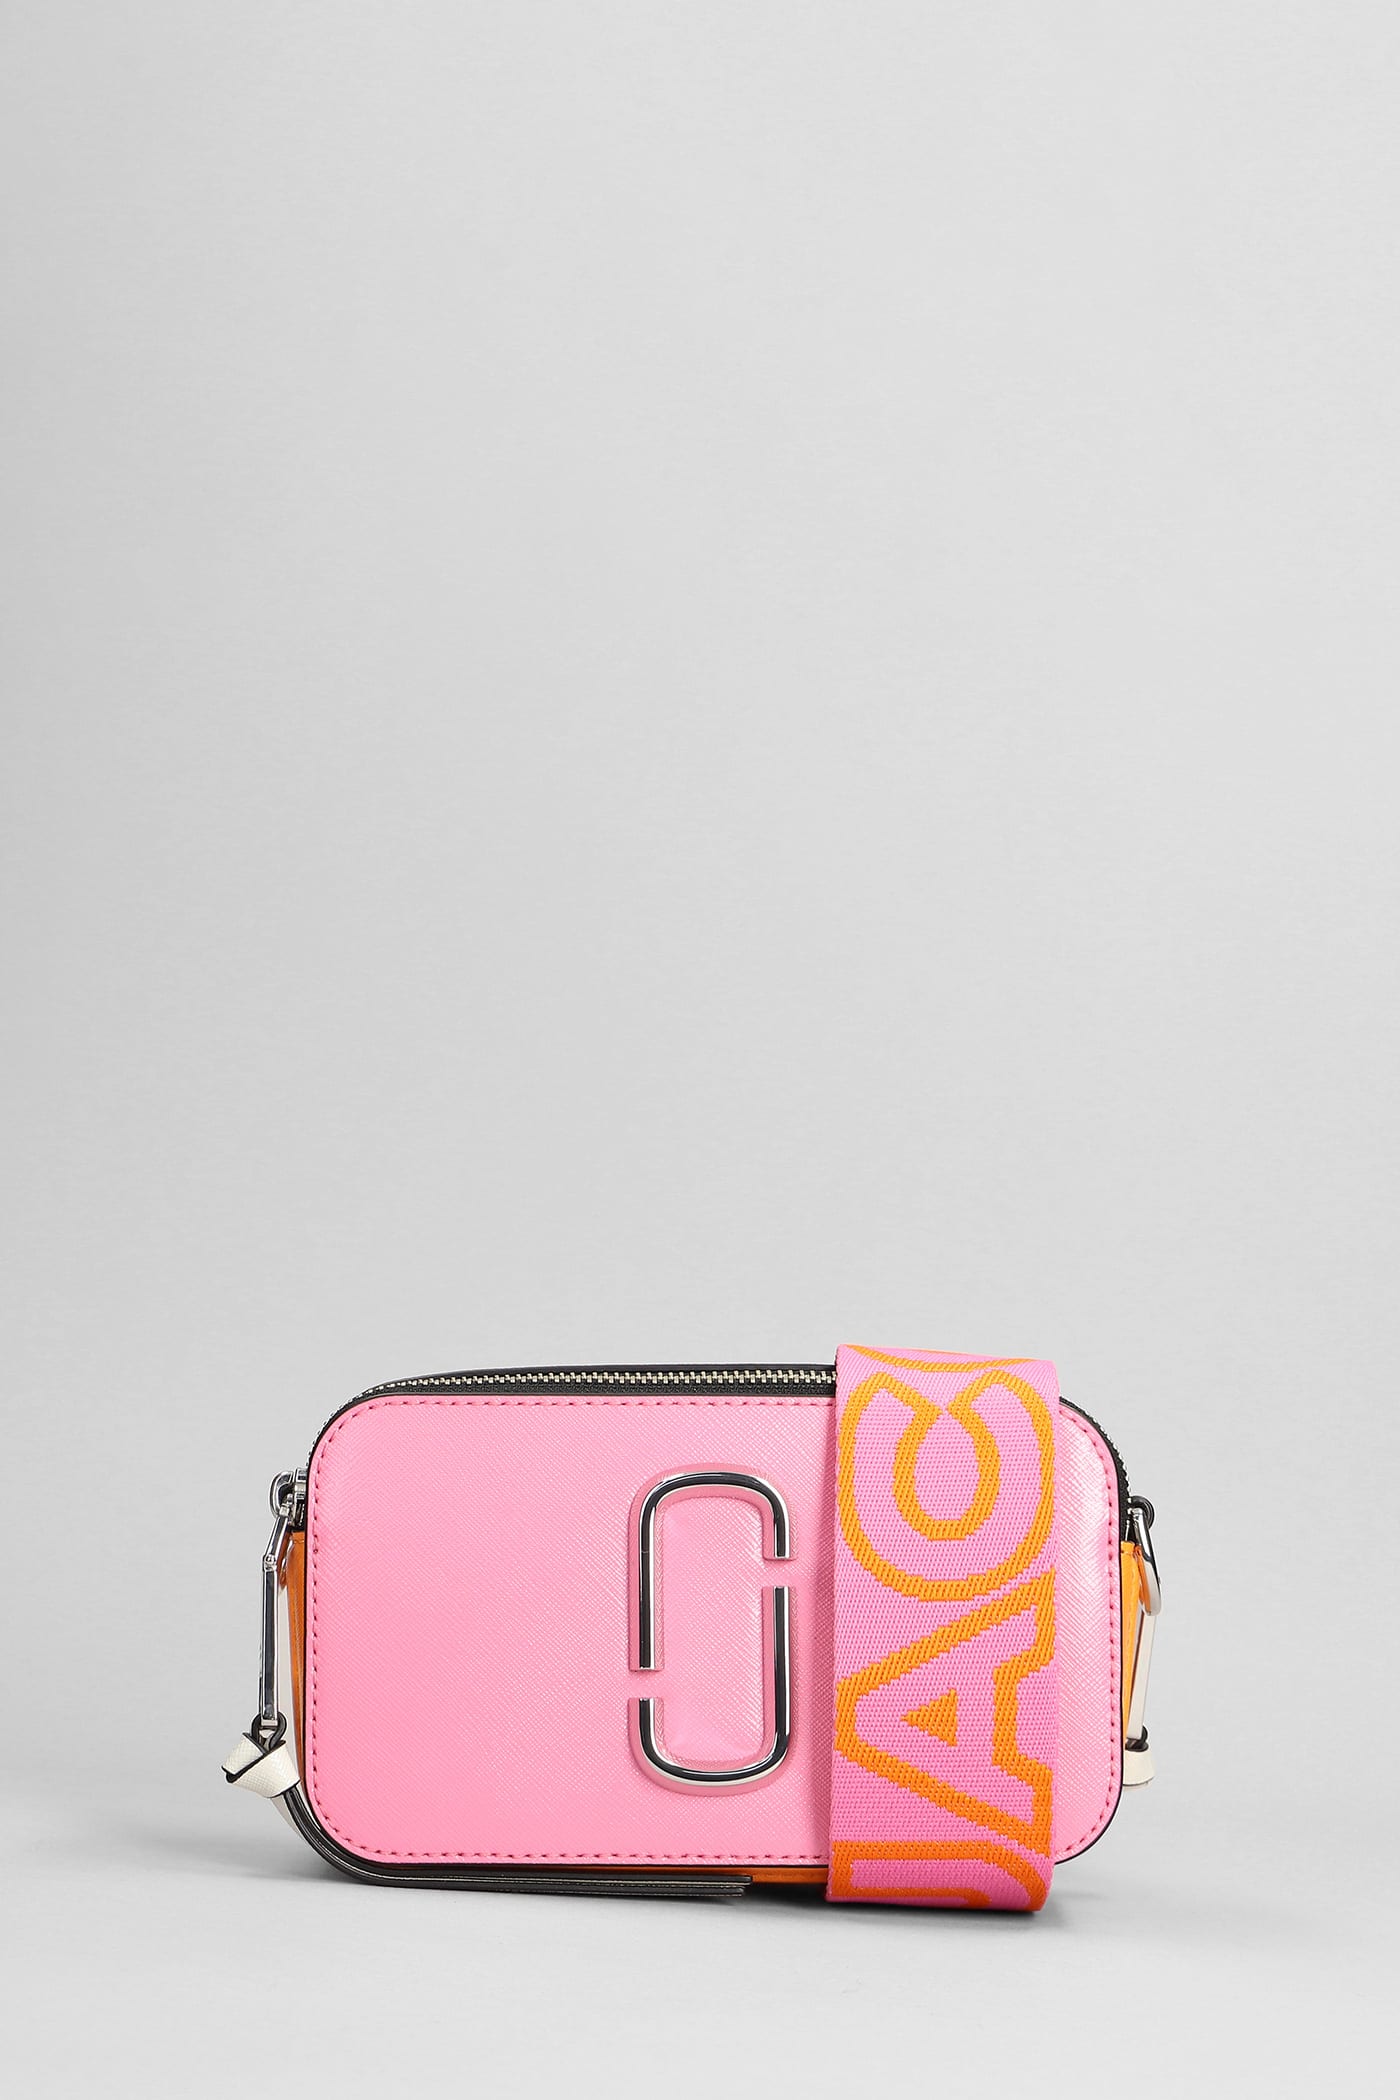 Marc Jacobs The Snapshot Shoulder Bag In Rose-pink Leather